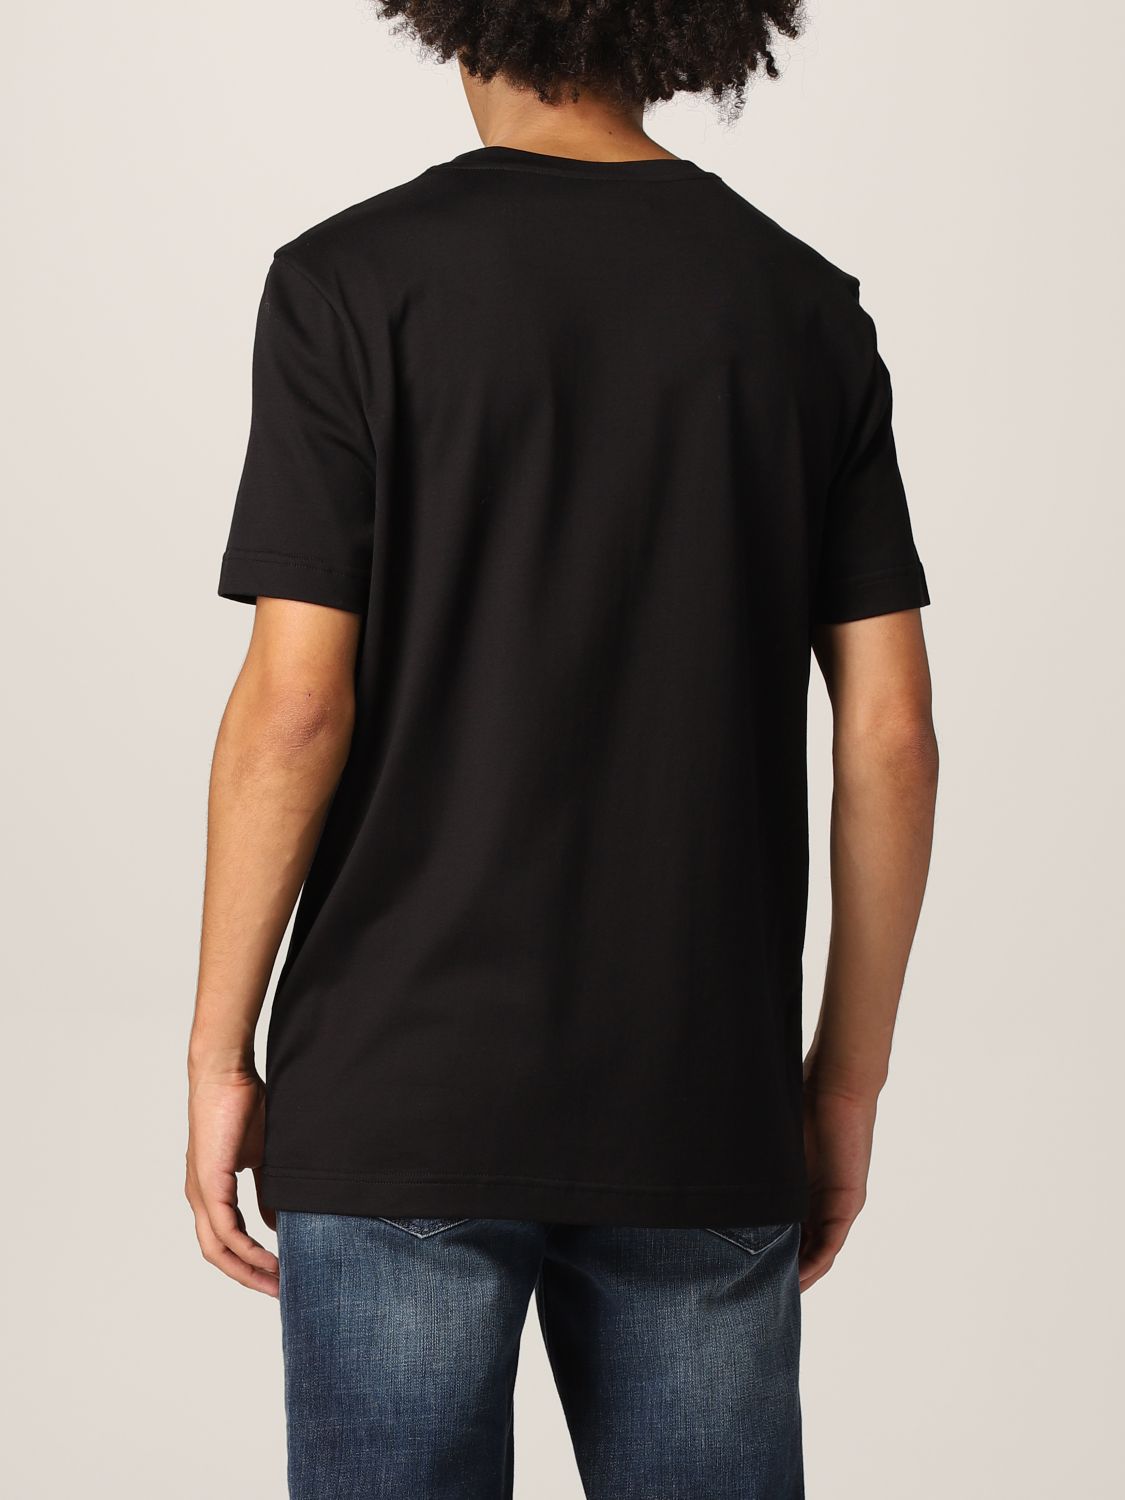 T恤 Knt: T恤 男士 Knt 黑色 2